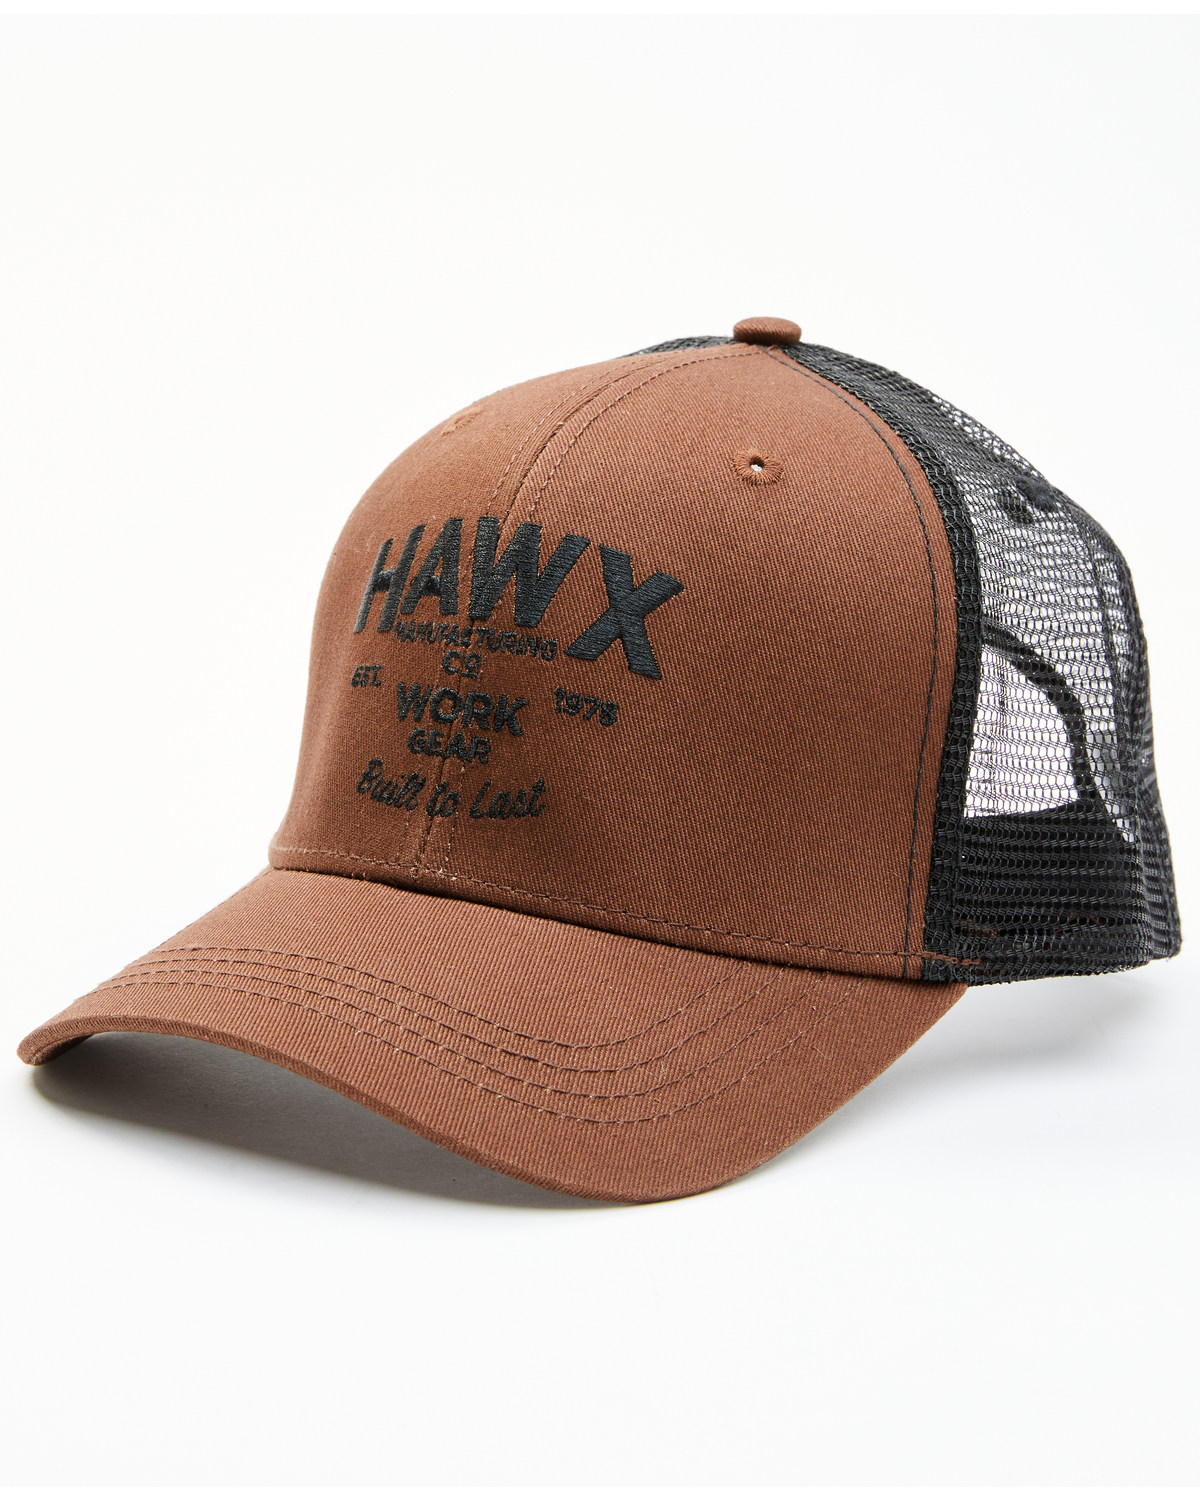 Hawx Men's Dark Brown Logo Graphic Mesh-Back Ball Cap